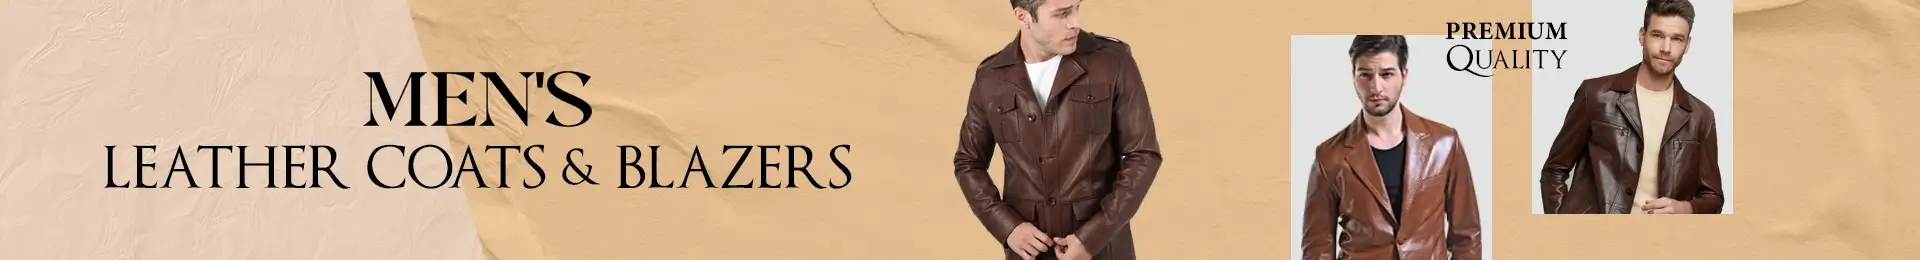 men's winter genuine leather coats & jackets, men leather blazers, casual blazers for men